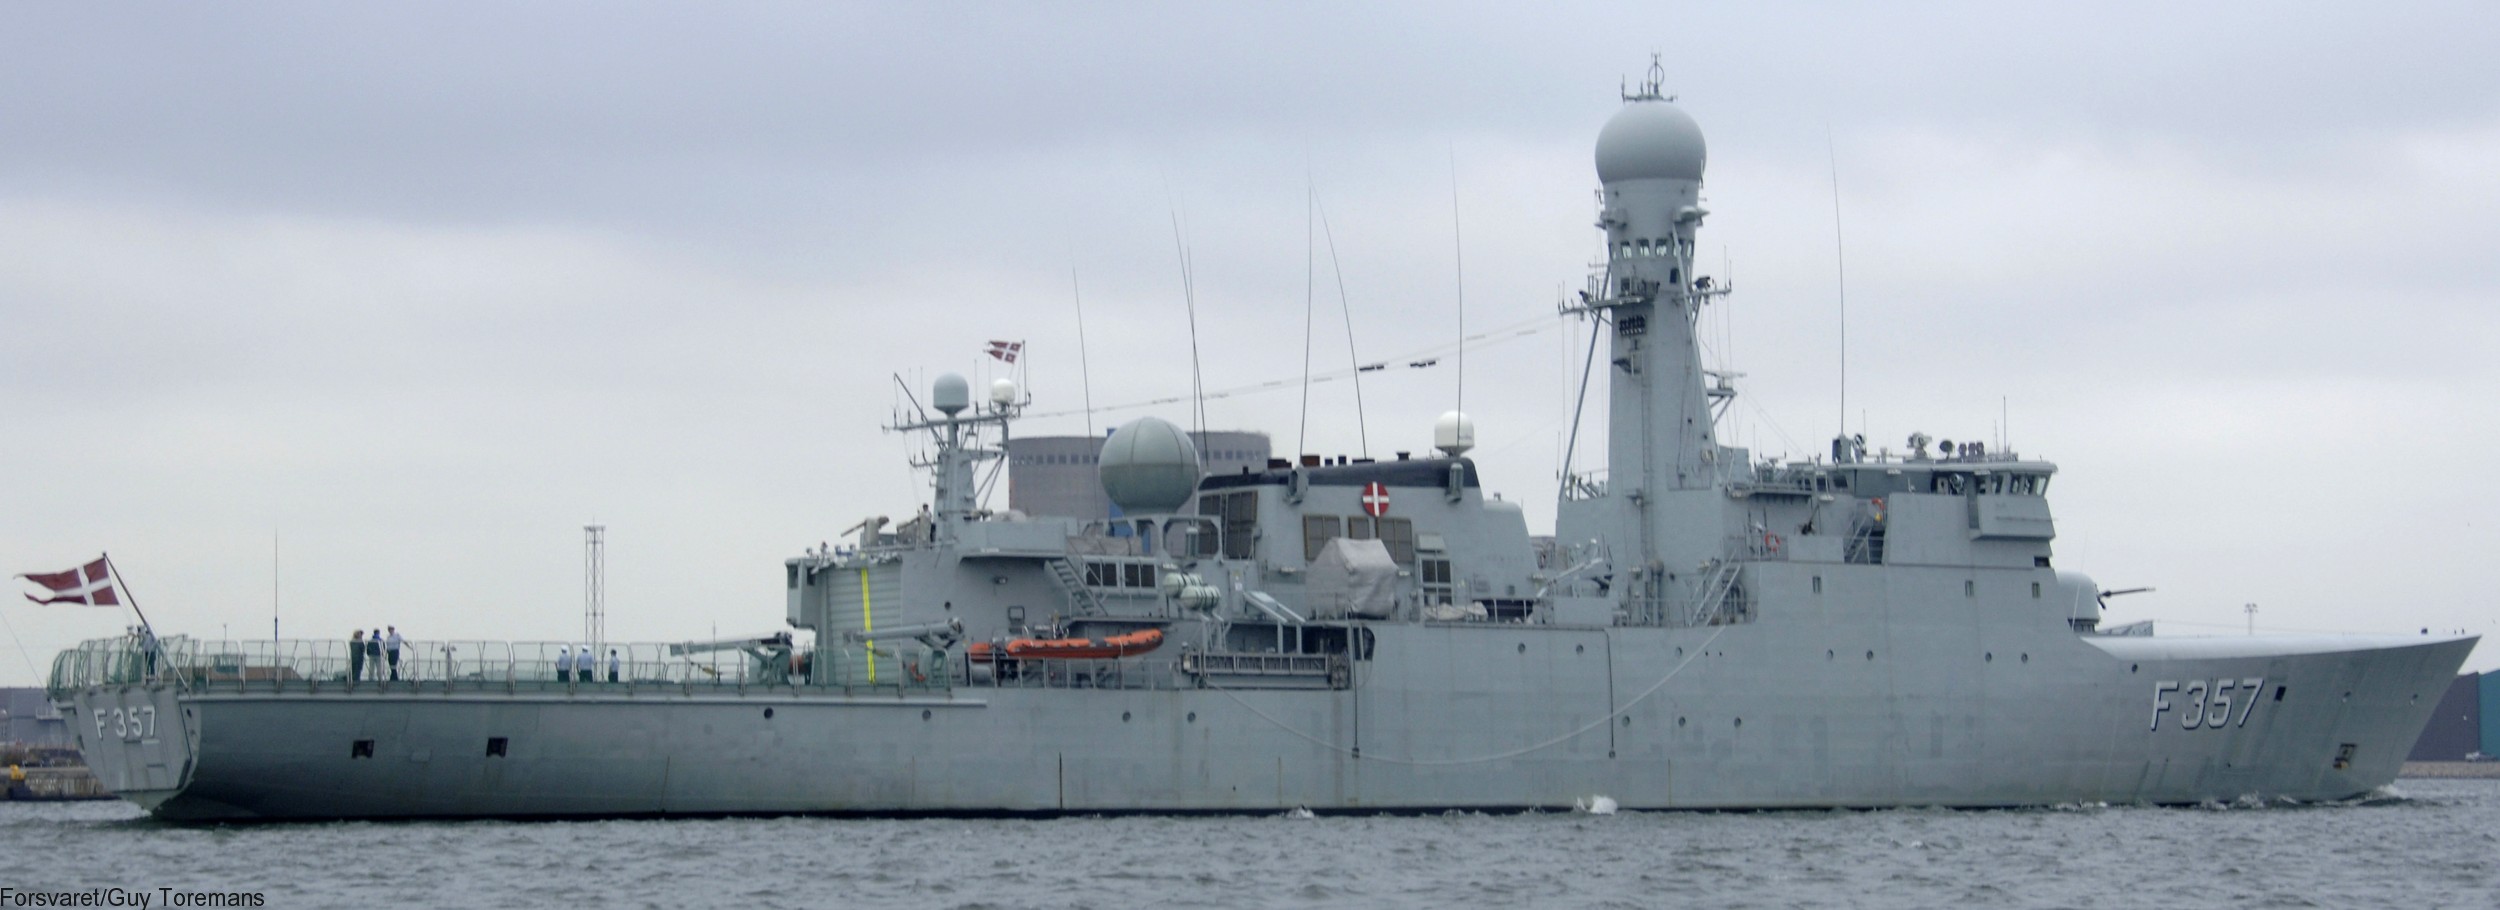 f-357 hdms thetis ocean patrol frigate royal danish navy kongelige danske marine inspektionsskibet 28